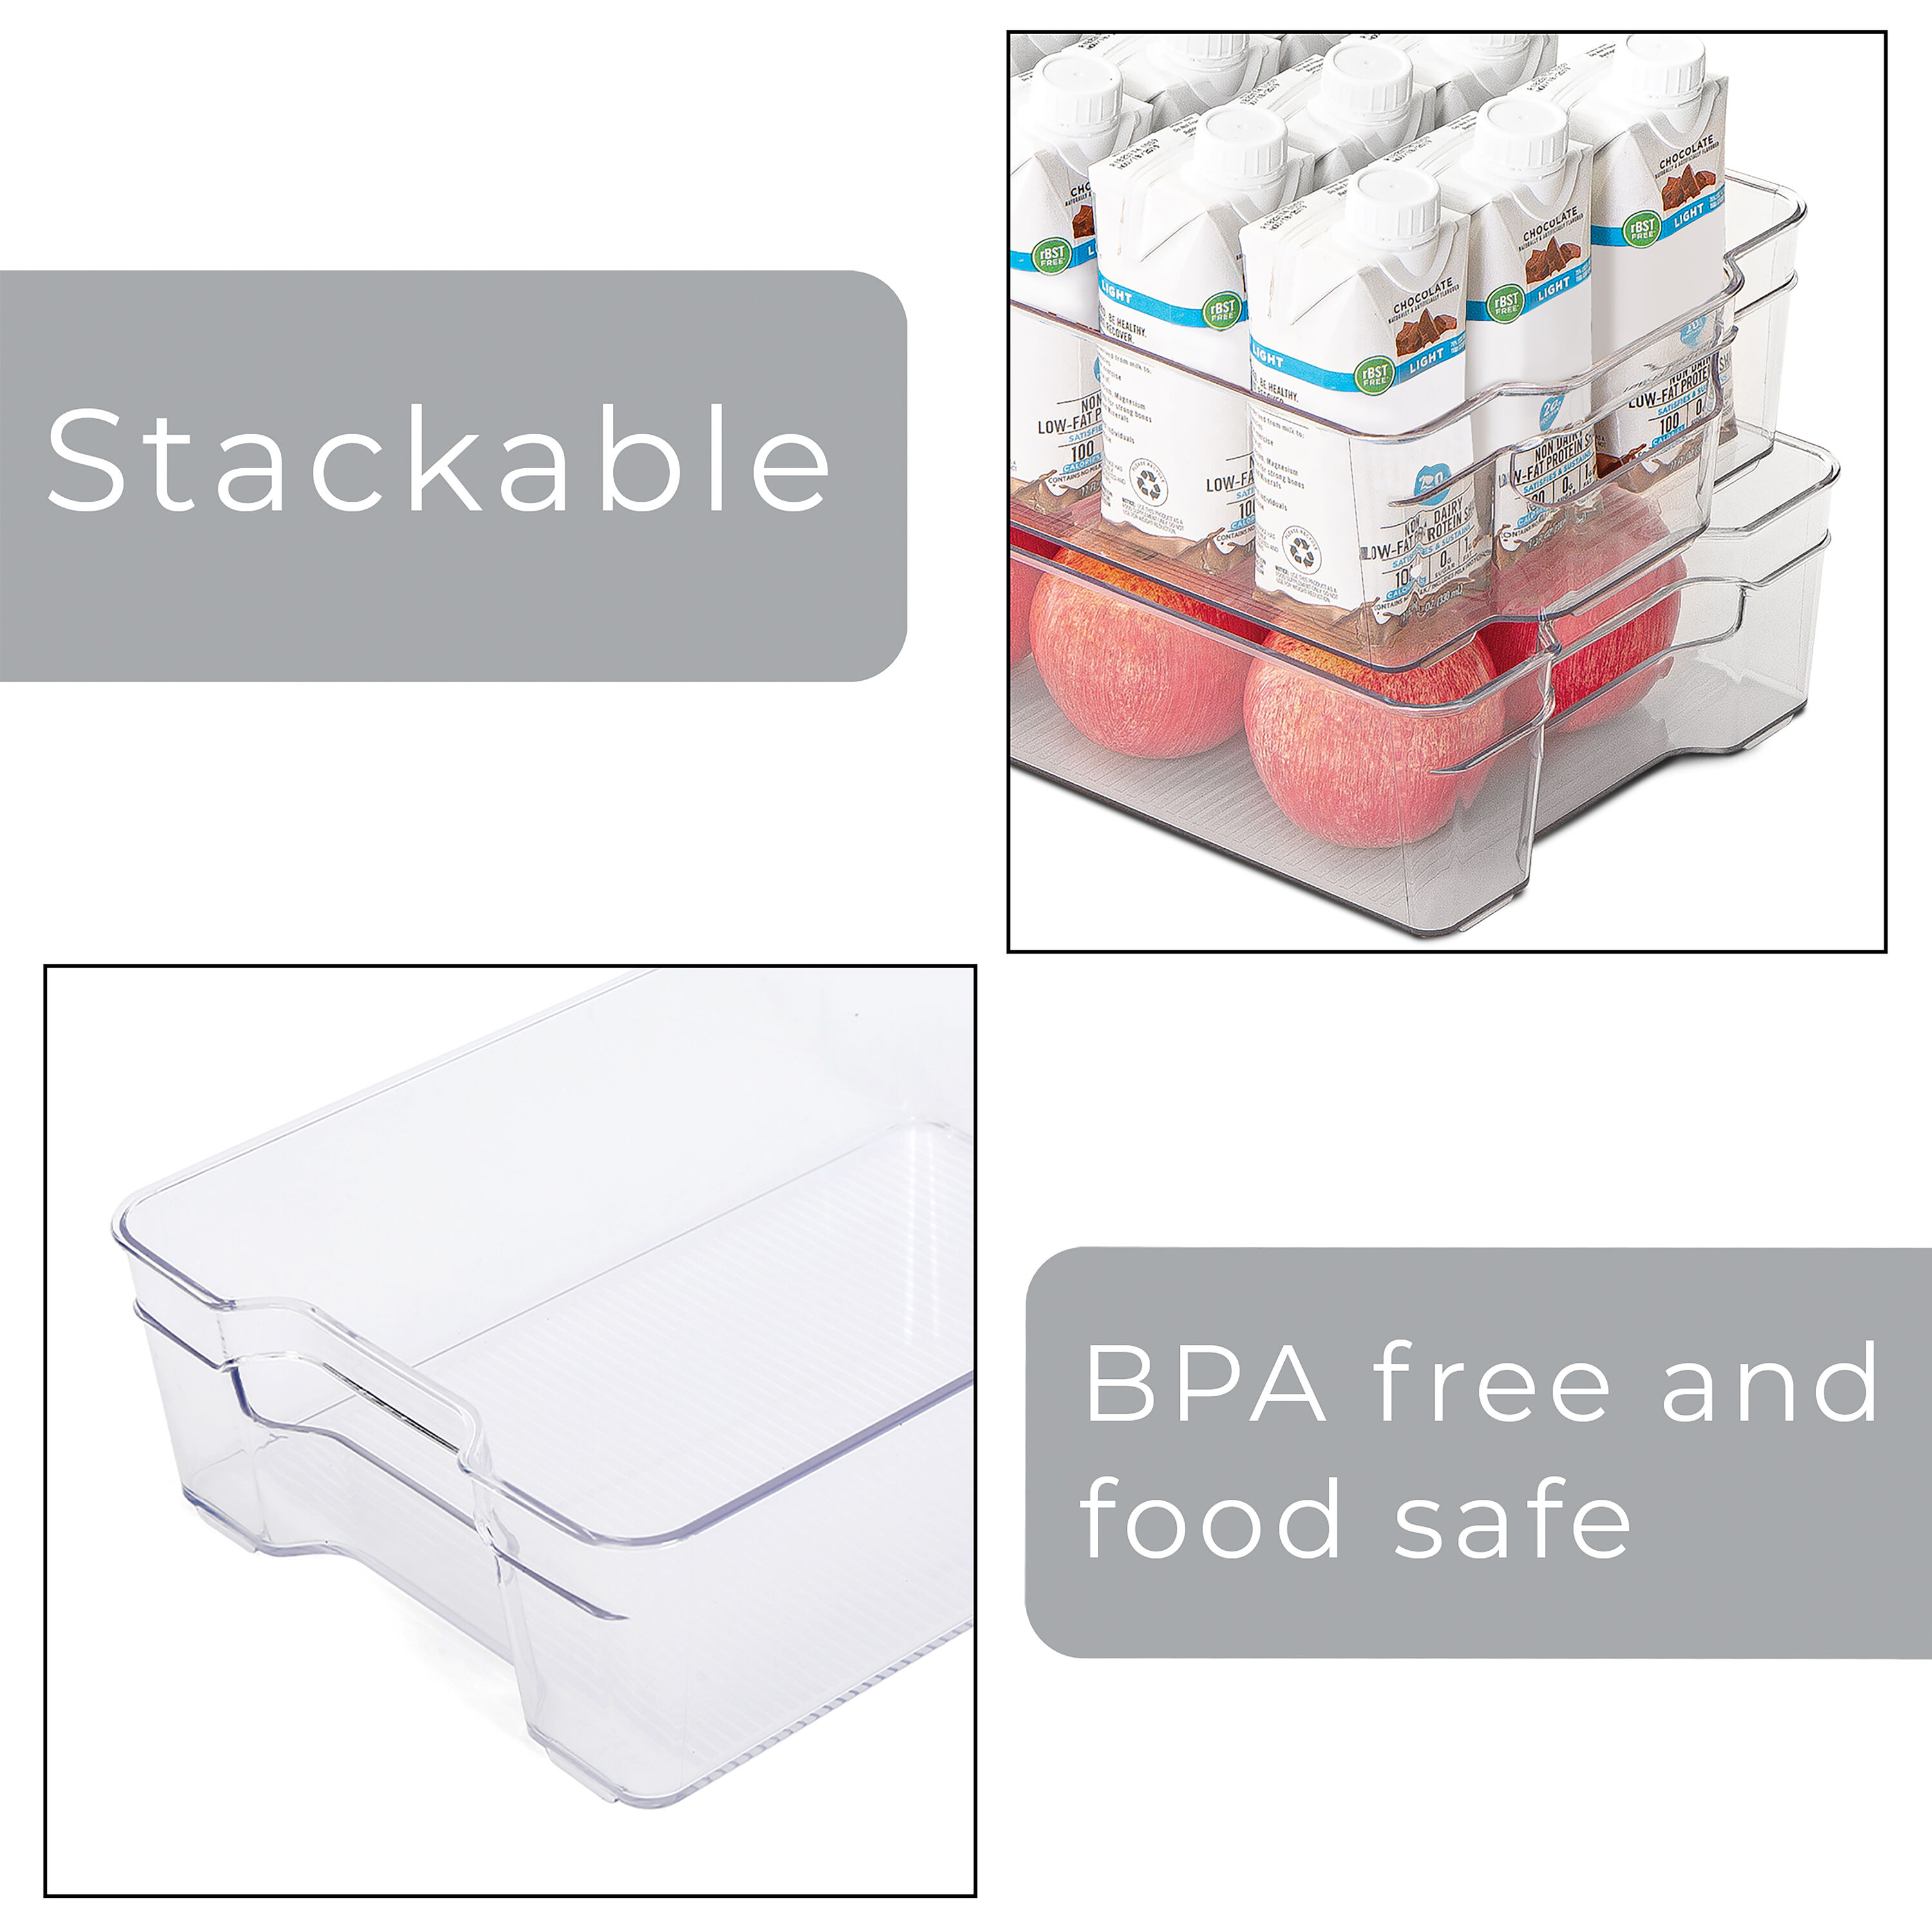 Storagemaid Stackable Refrigerator Storage & Organizing Bins - Set of 6 Clear